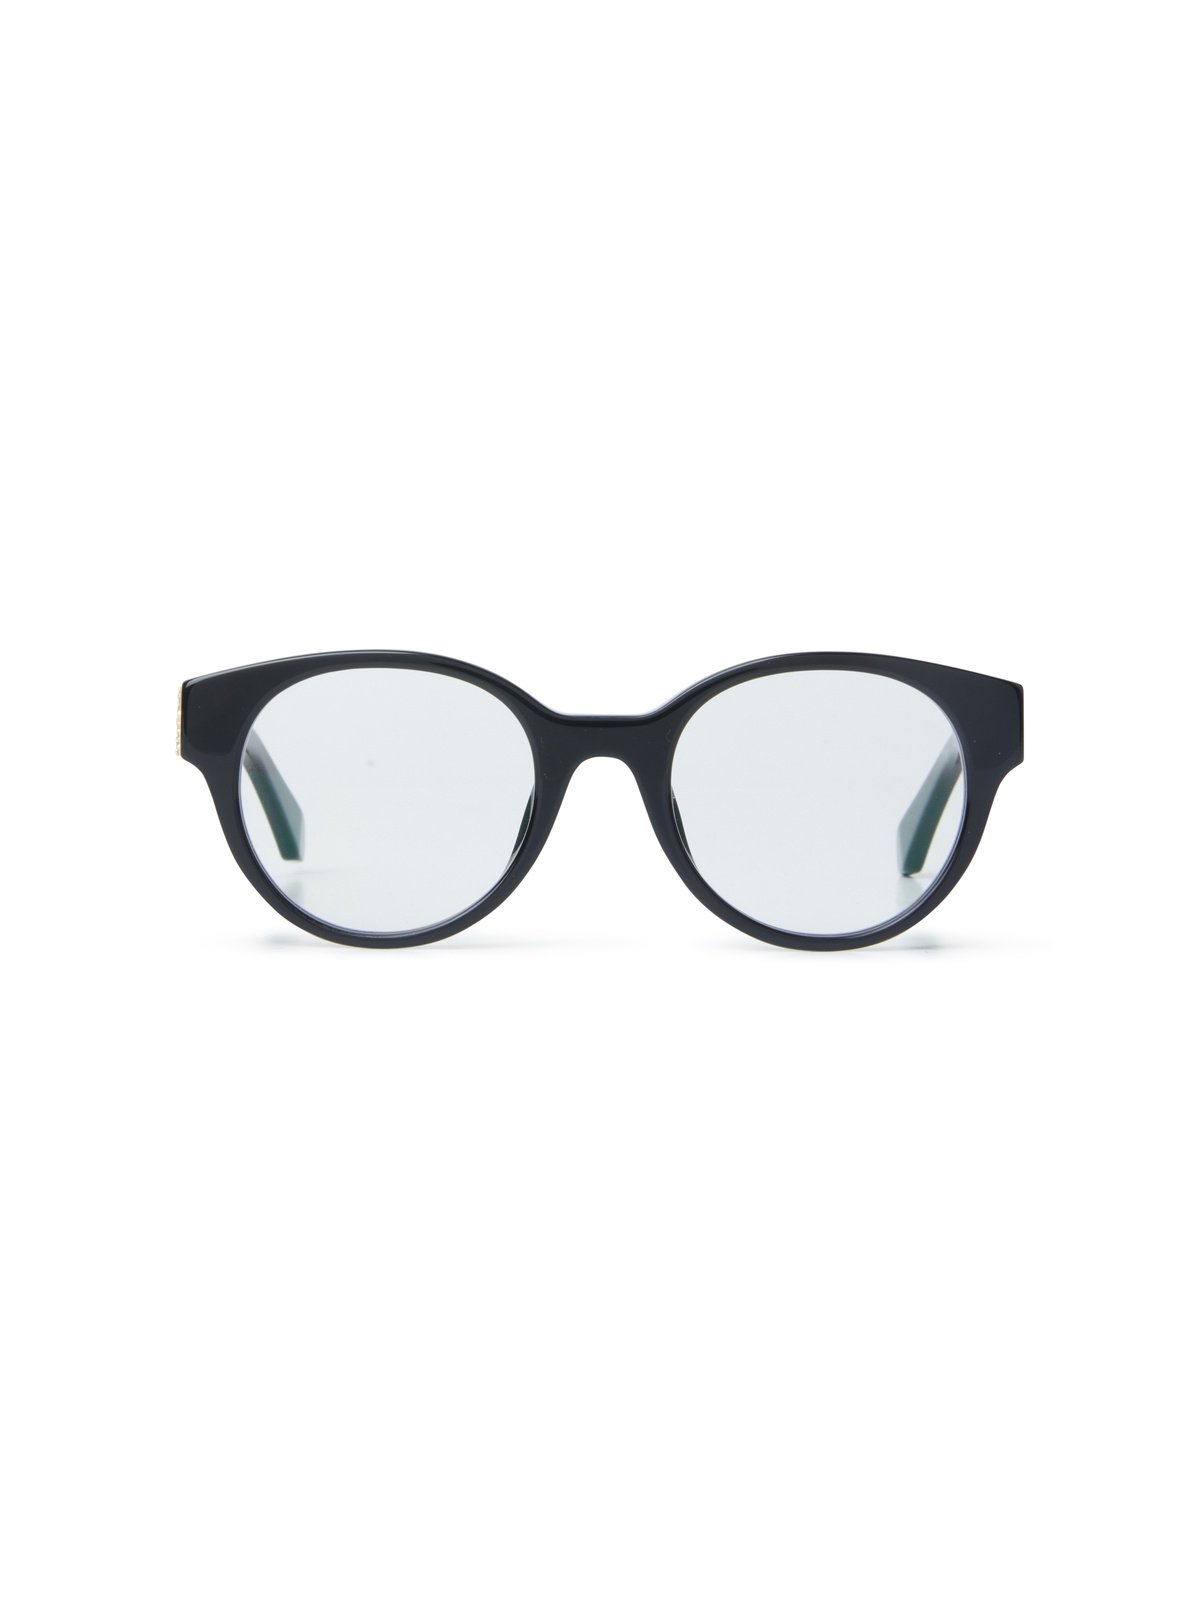 Off-White Round Frame Glasses